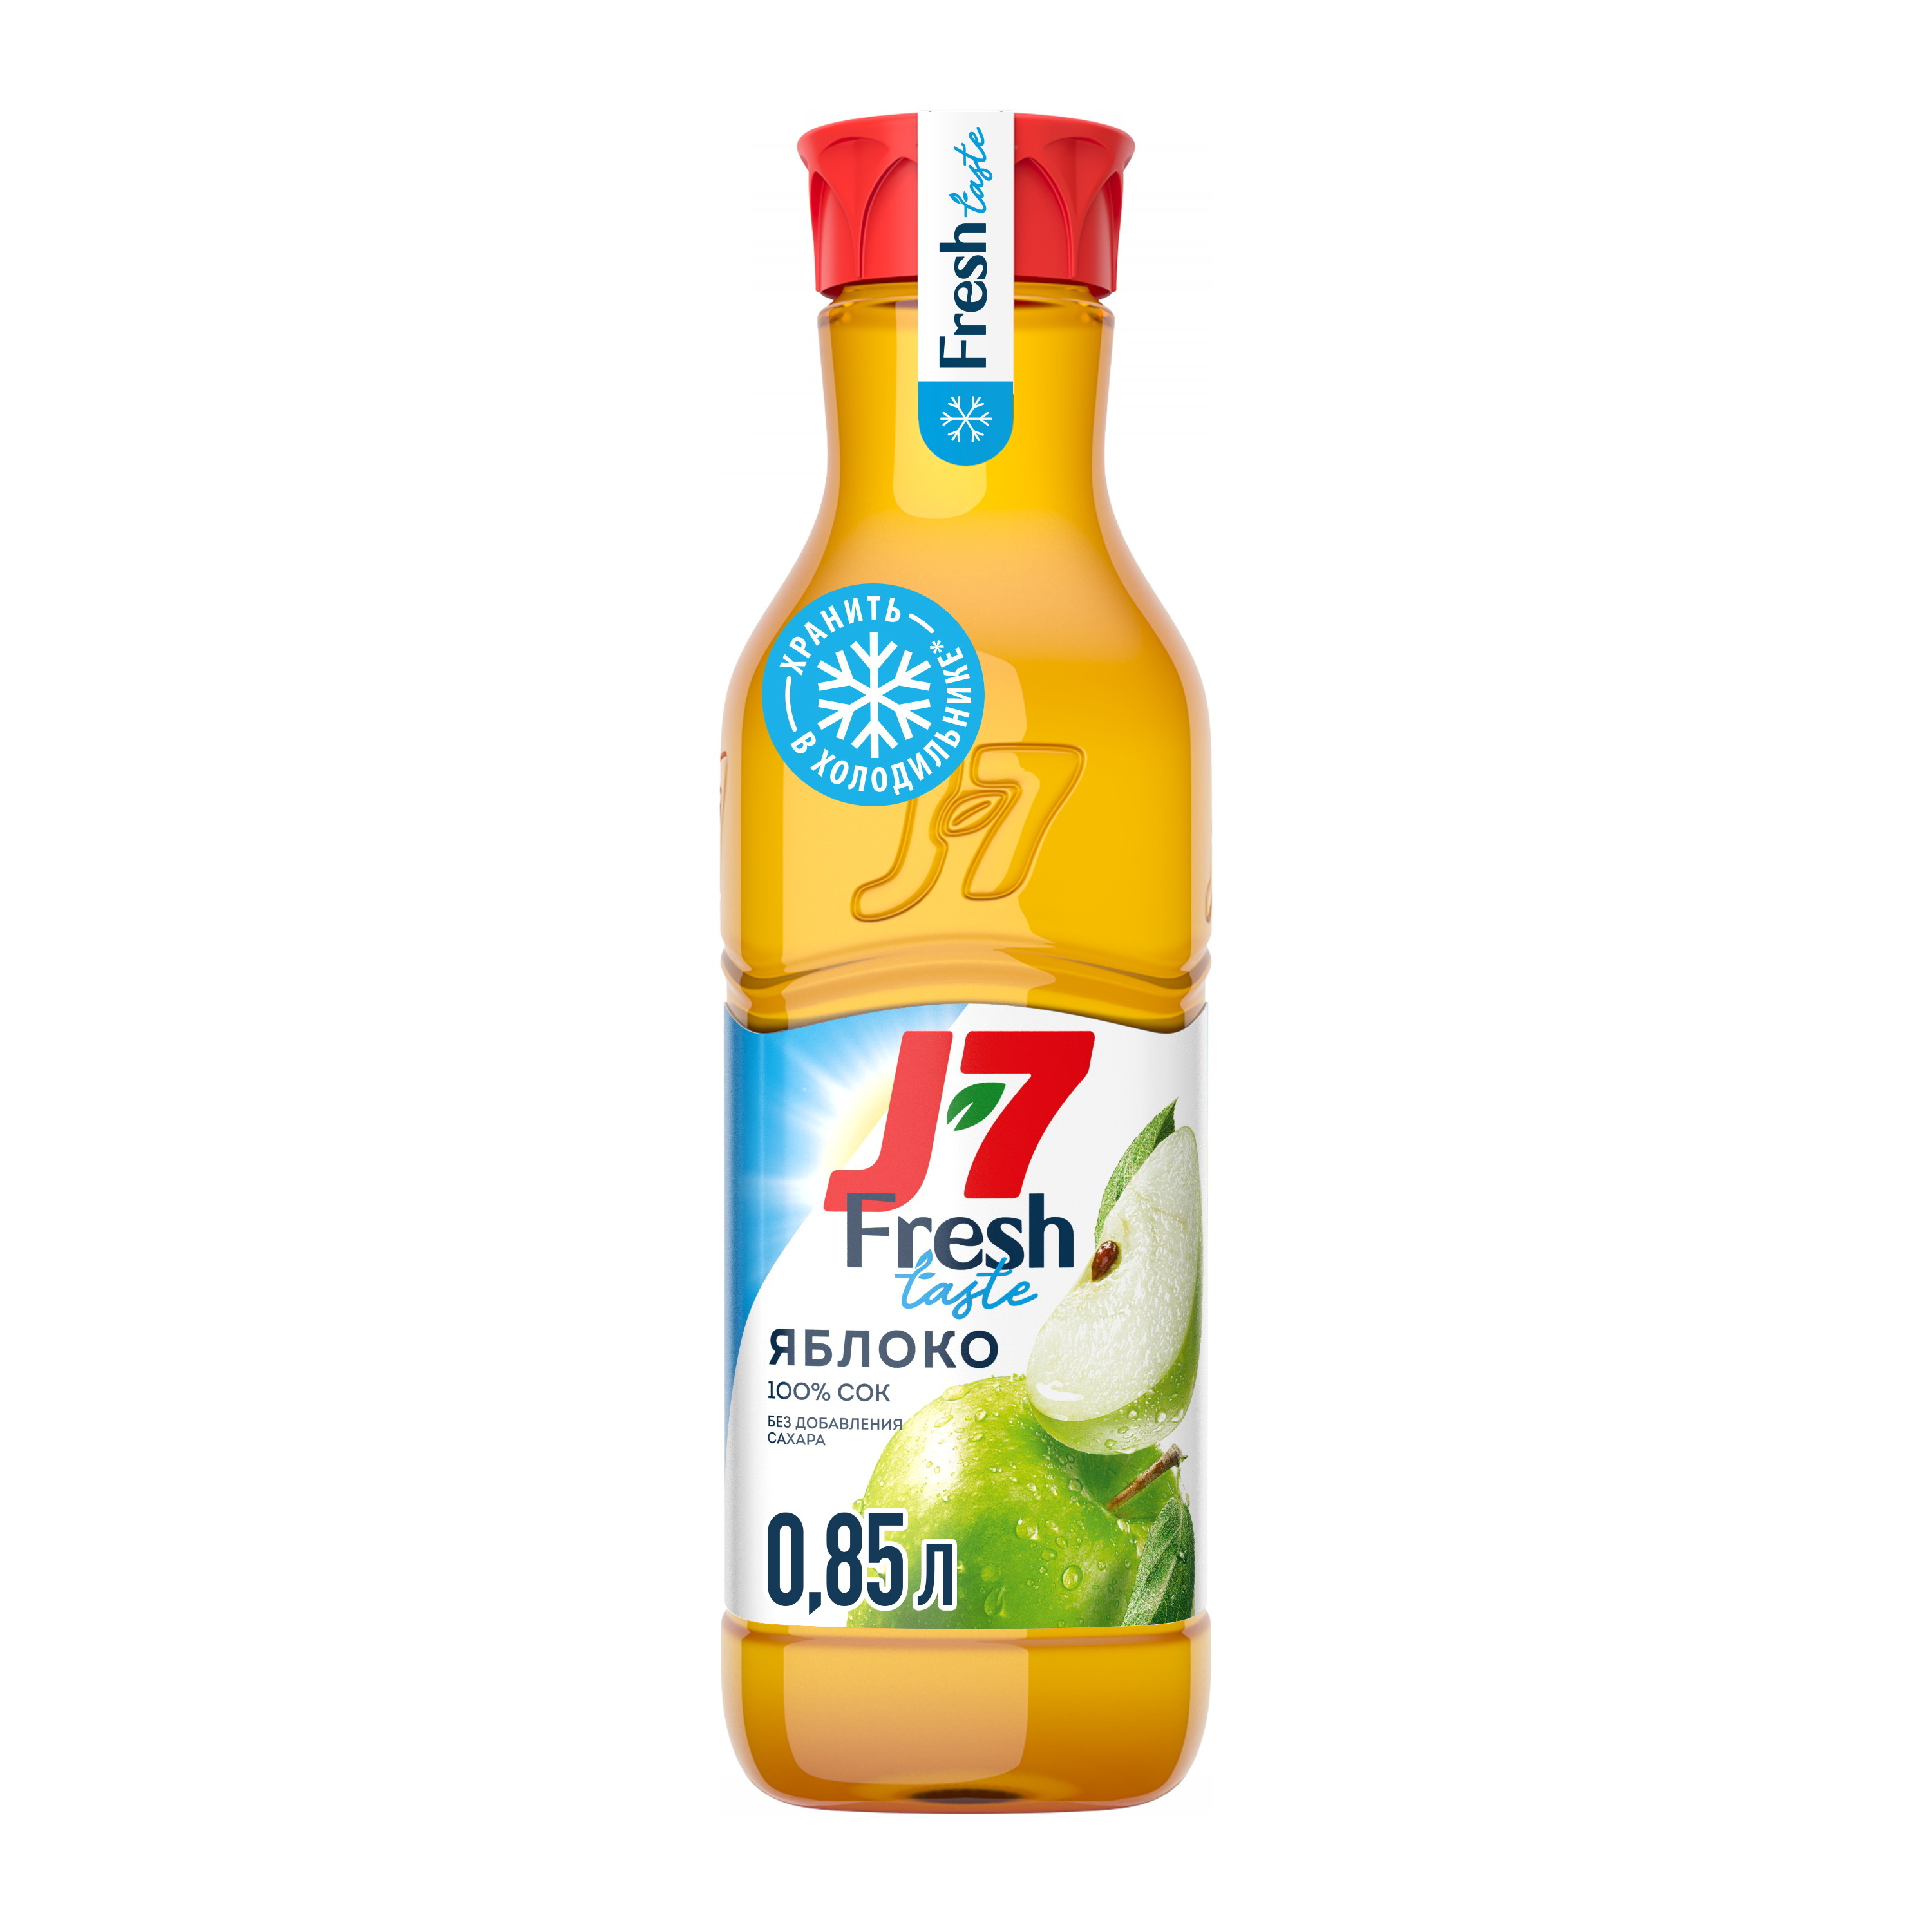 J7 fresh. J7 сок Фреш. J7 Fresh taste сок яблоко осветленный 0.85 л пл/б. Сок j7 Fresh taste яблоко. Сок j7 ПЭТ.